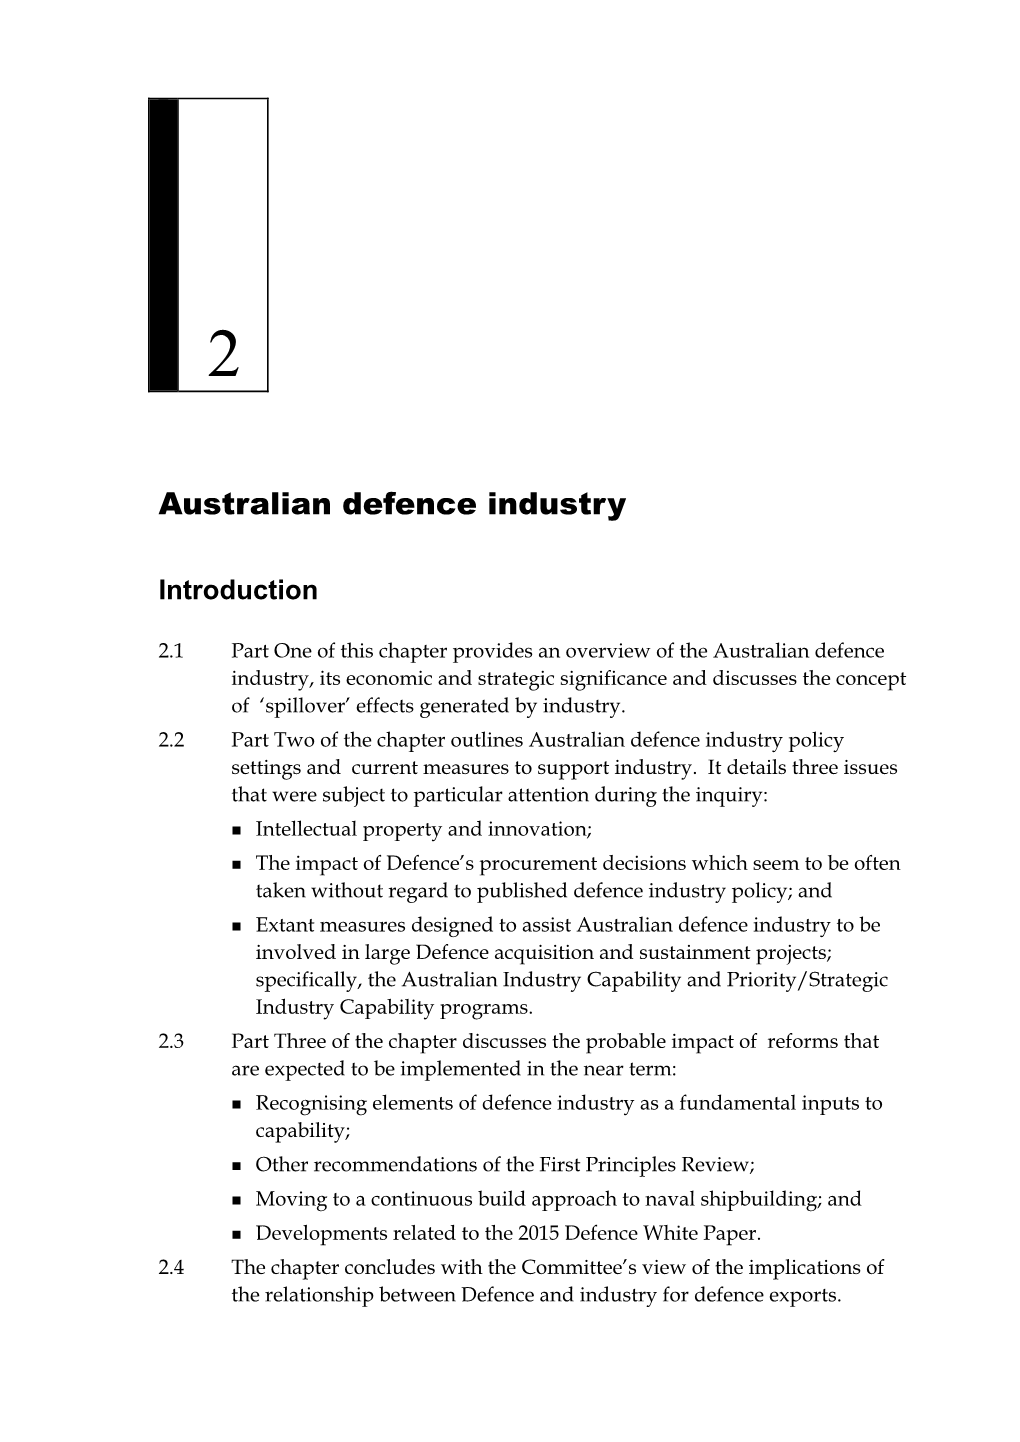 Australian Defence Industry